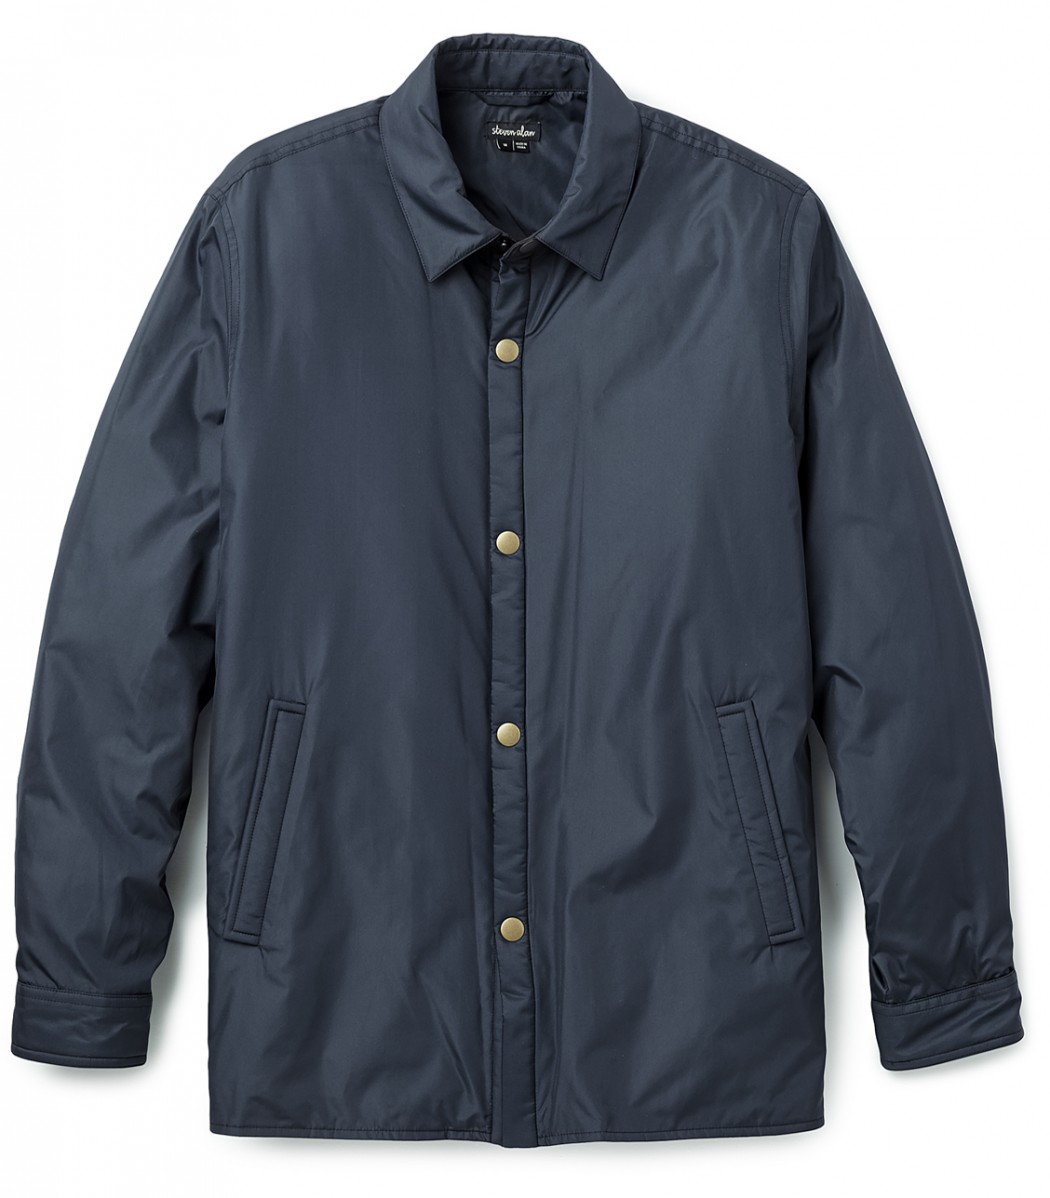 6 Overshirts AKA Shirt Jackets Perfect for Winter Layering – The ...